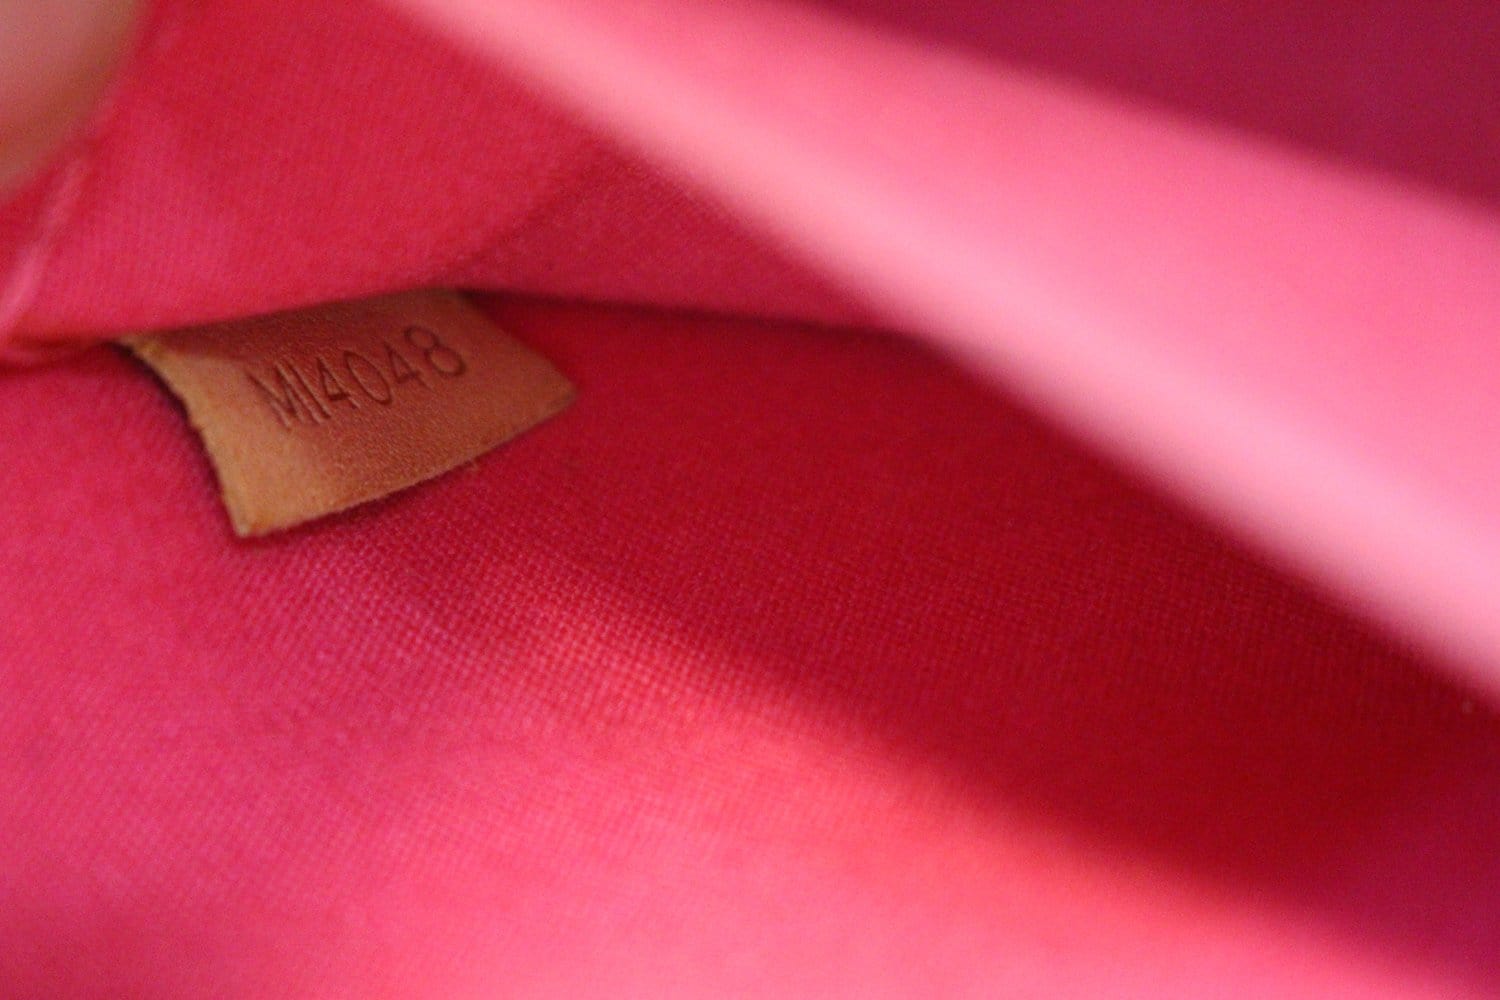 Louis Vuitton green 2008 Alma MM top handle bag in Monogram Vernis